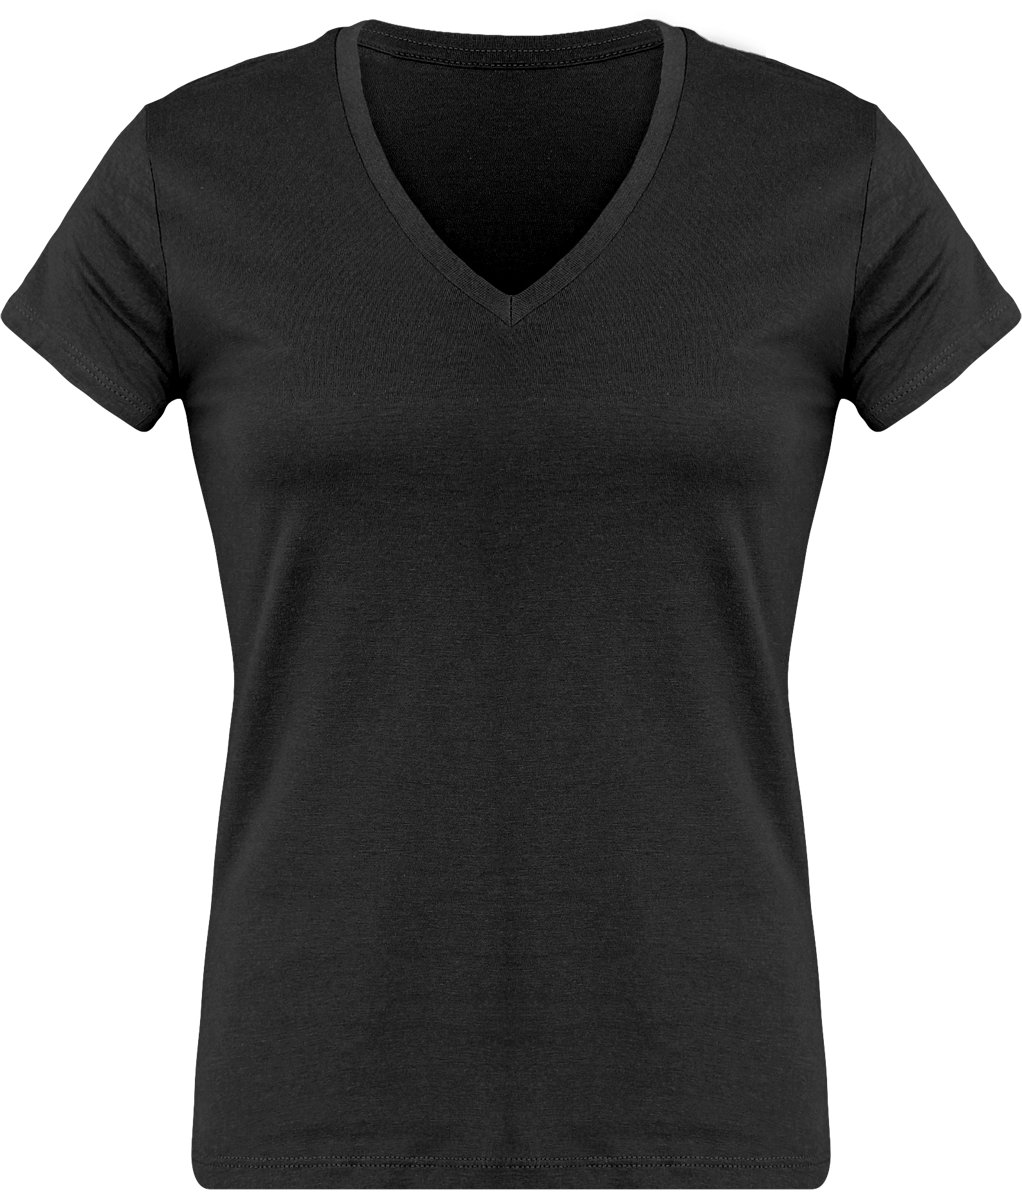 Customizable Women's T-Shirt, Feminine And Comfortable With Its V-Neck Dark Grey